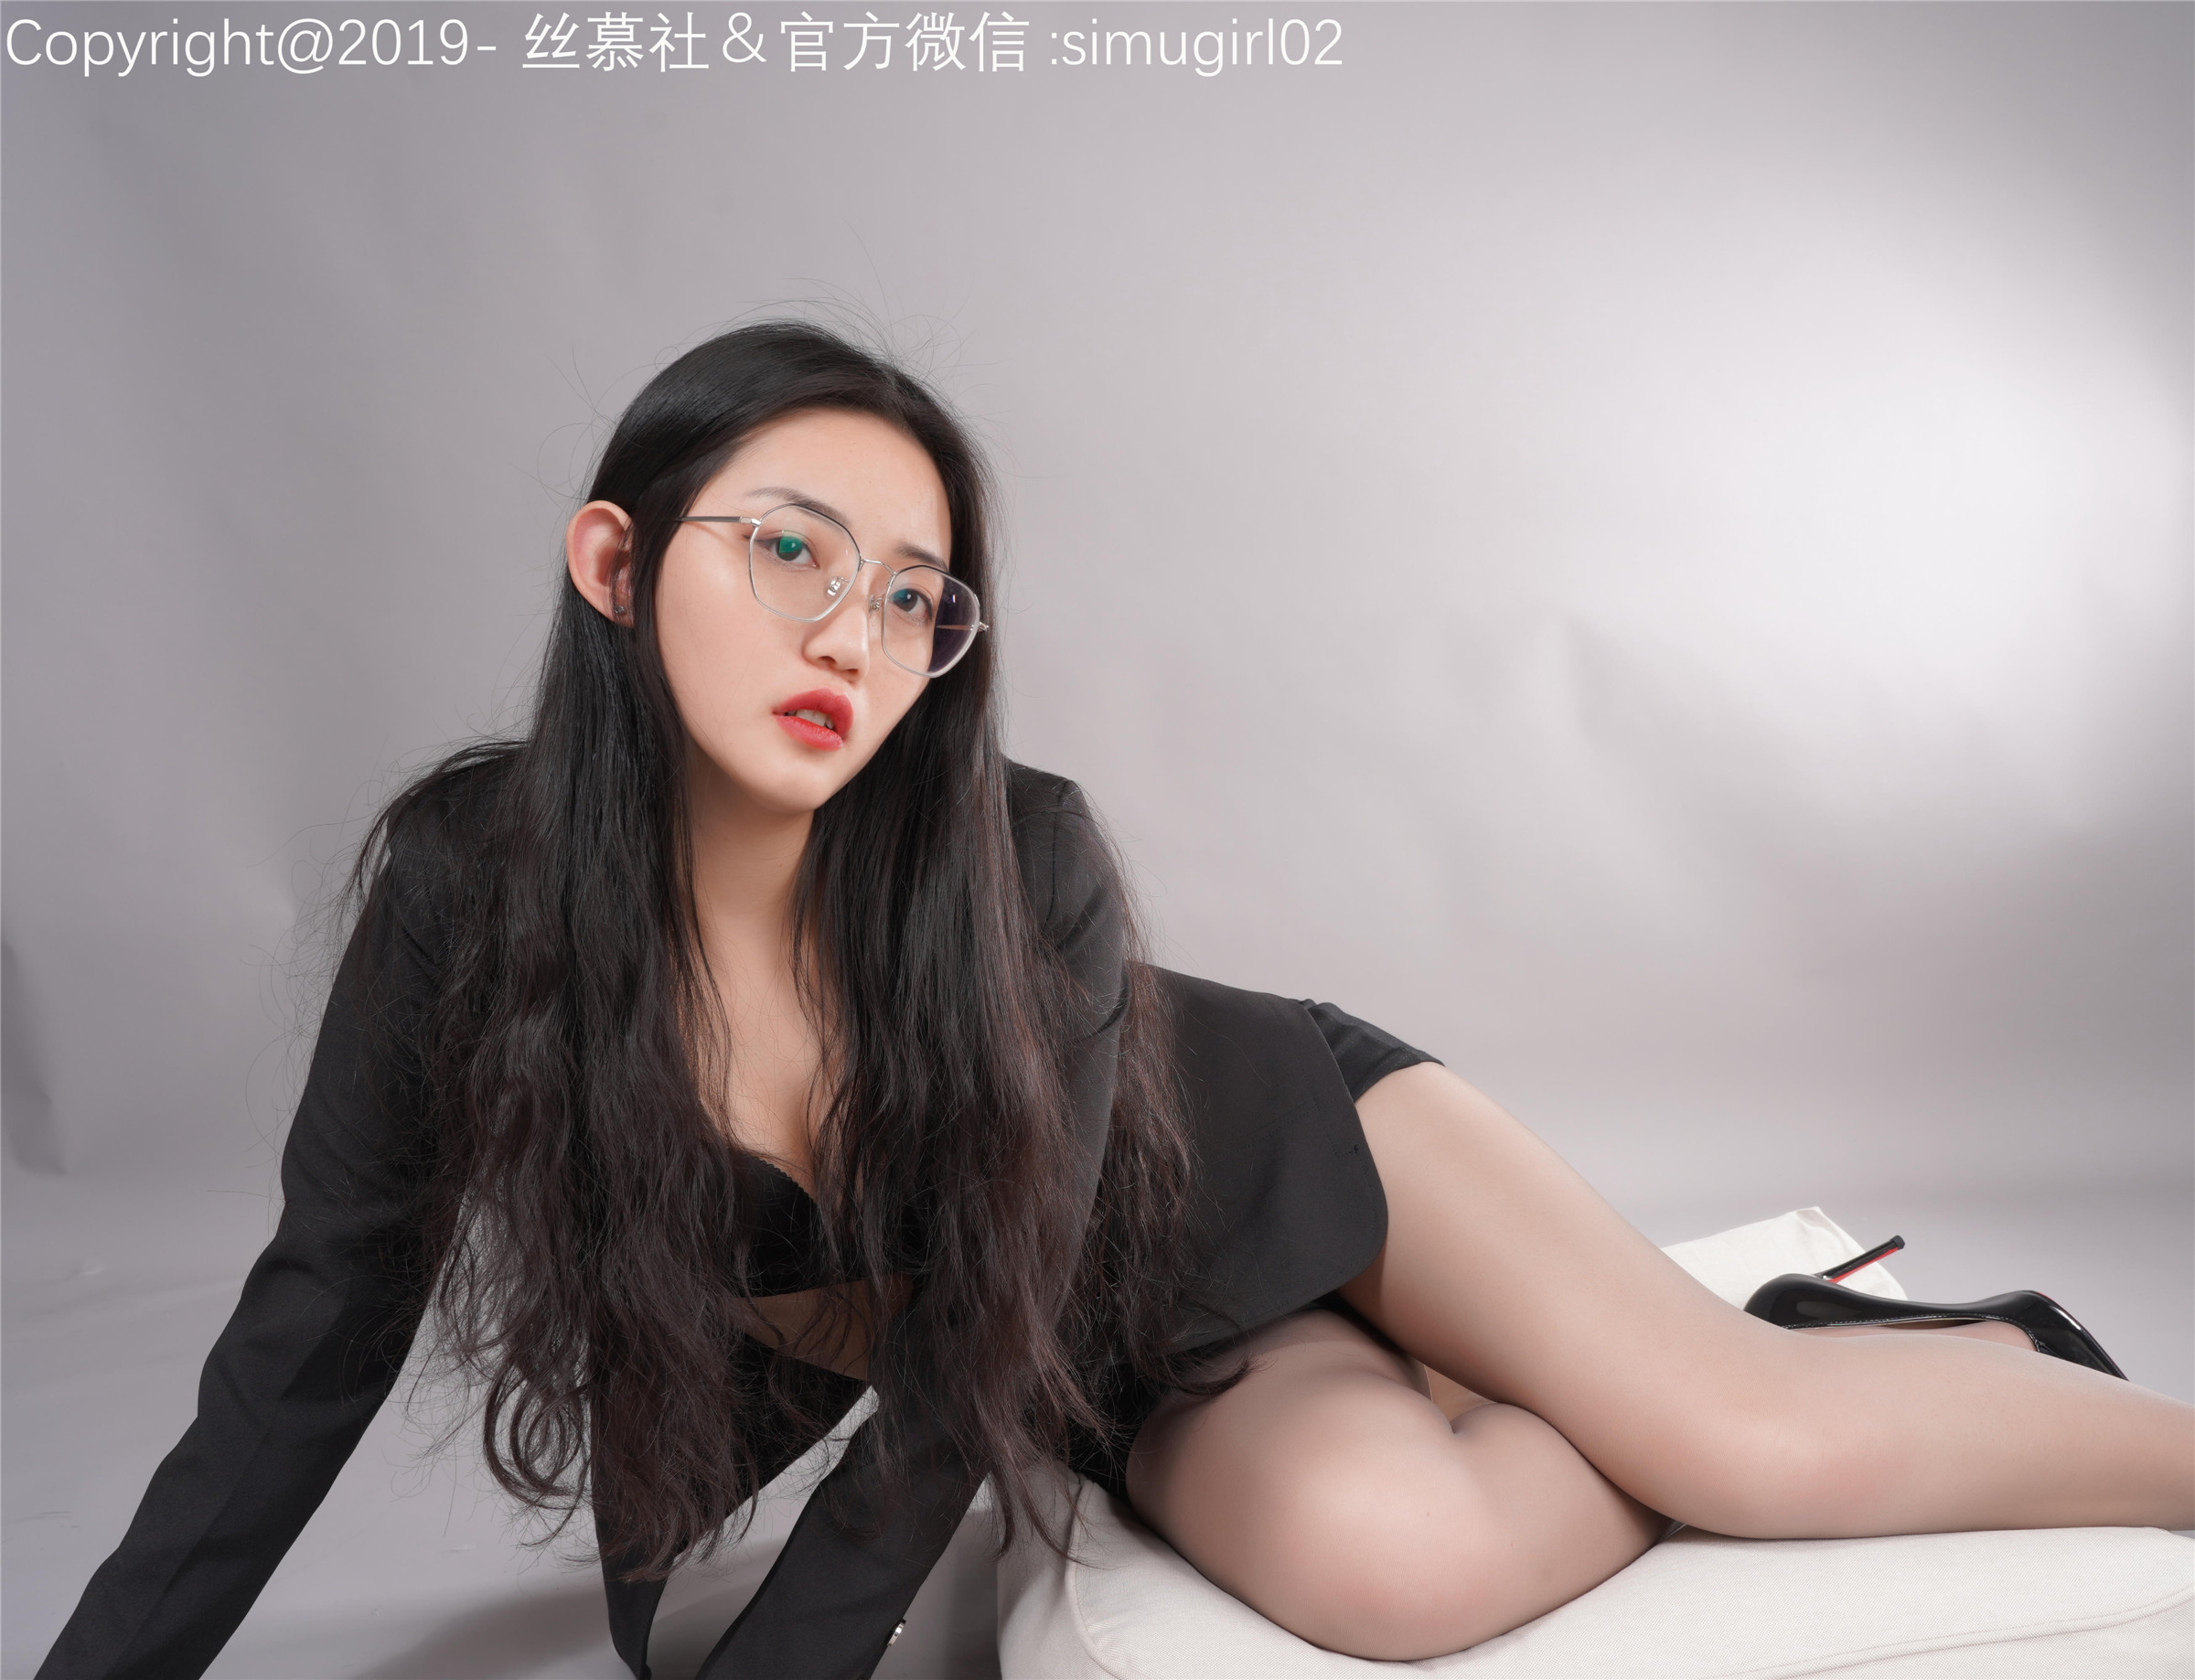 Sm007 model: Shuangshuang